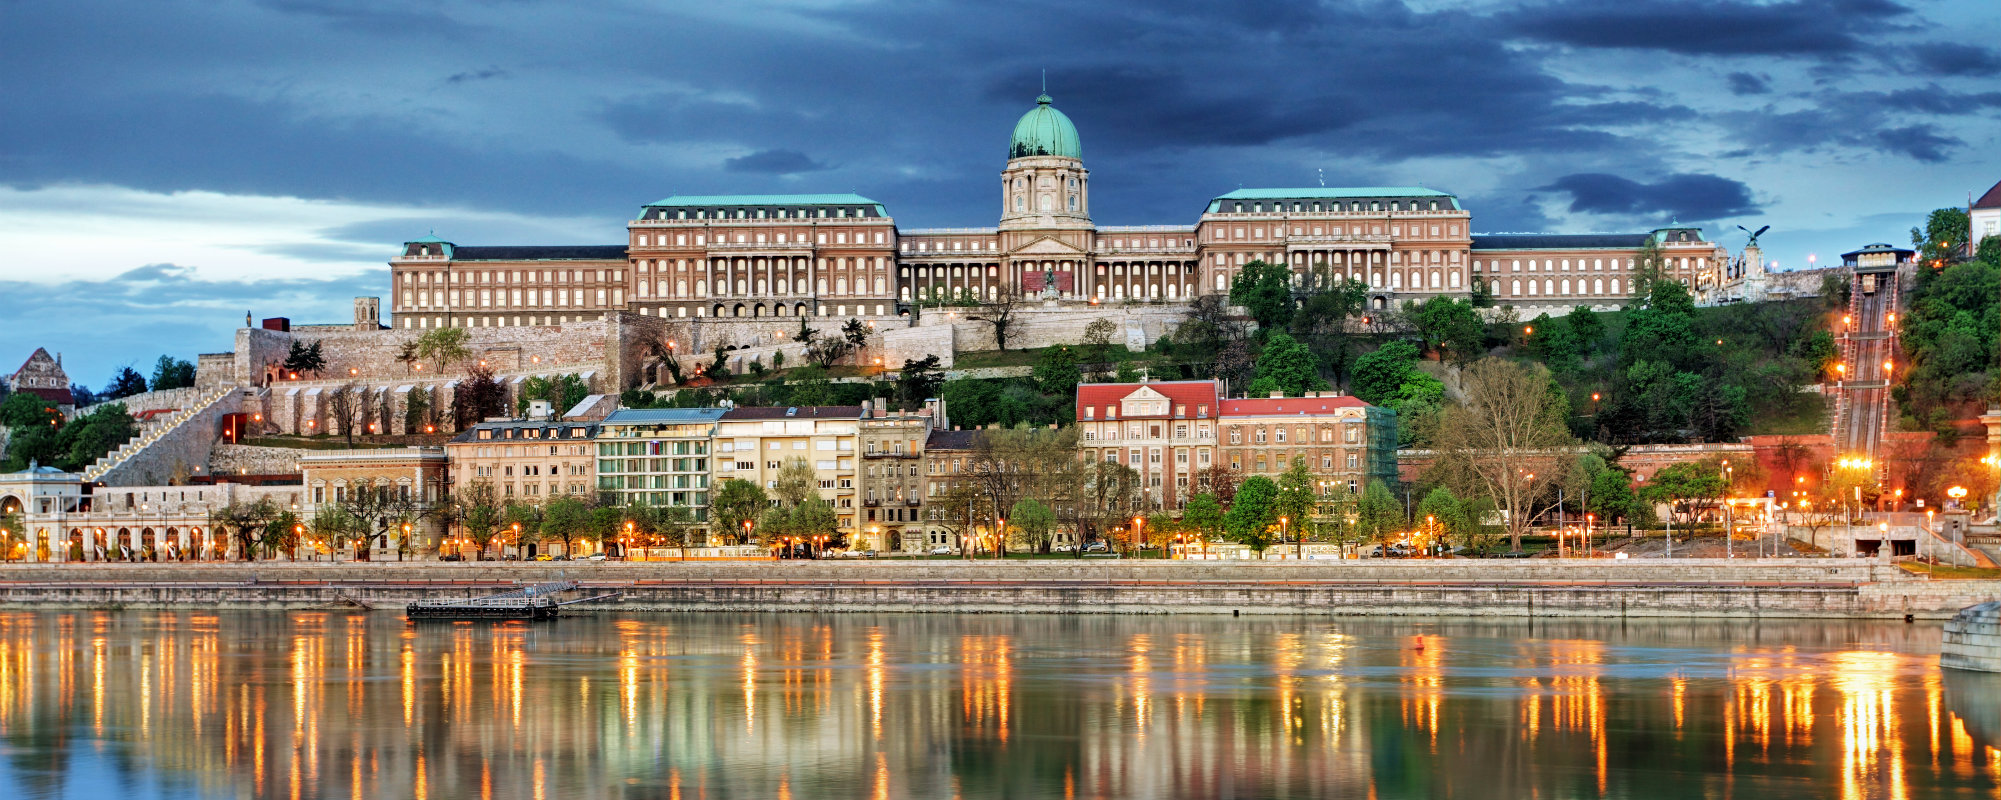 Budapest CastleA